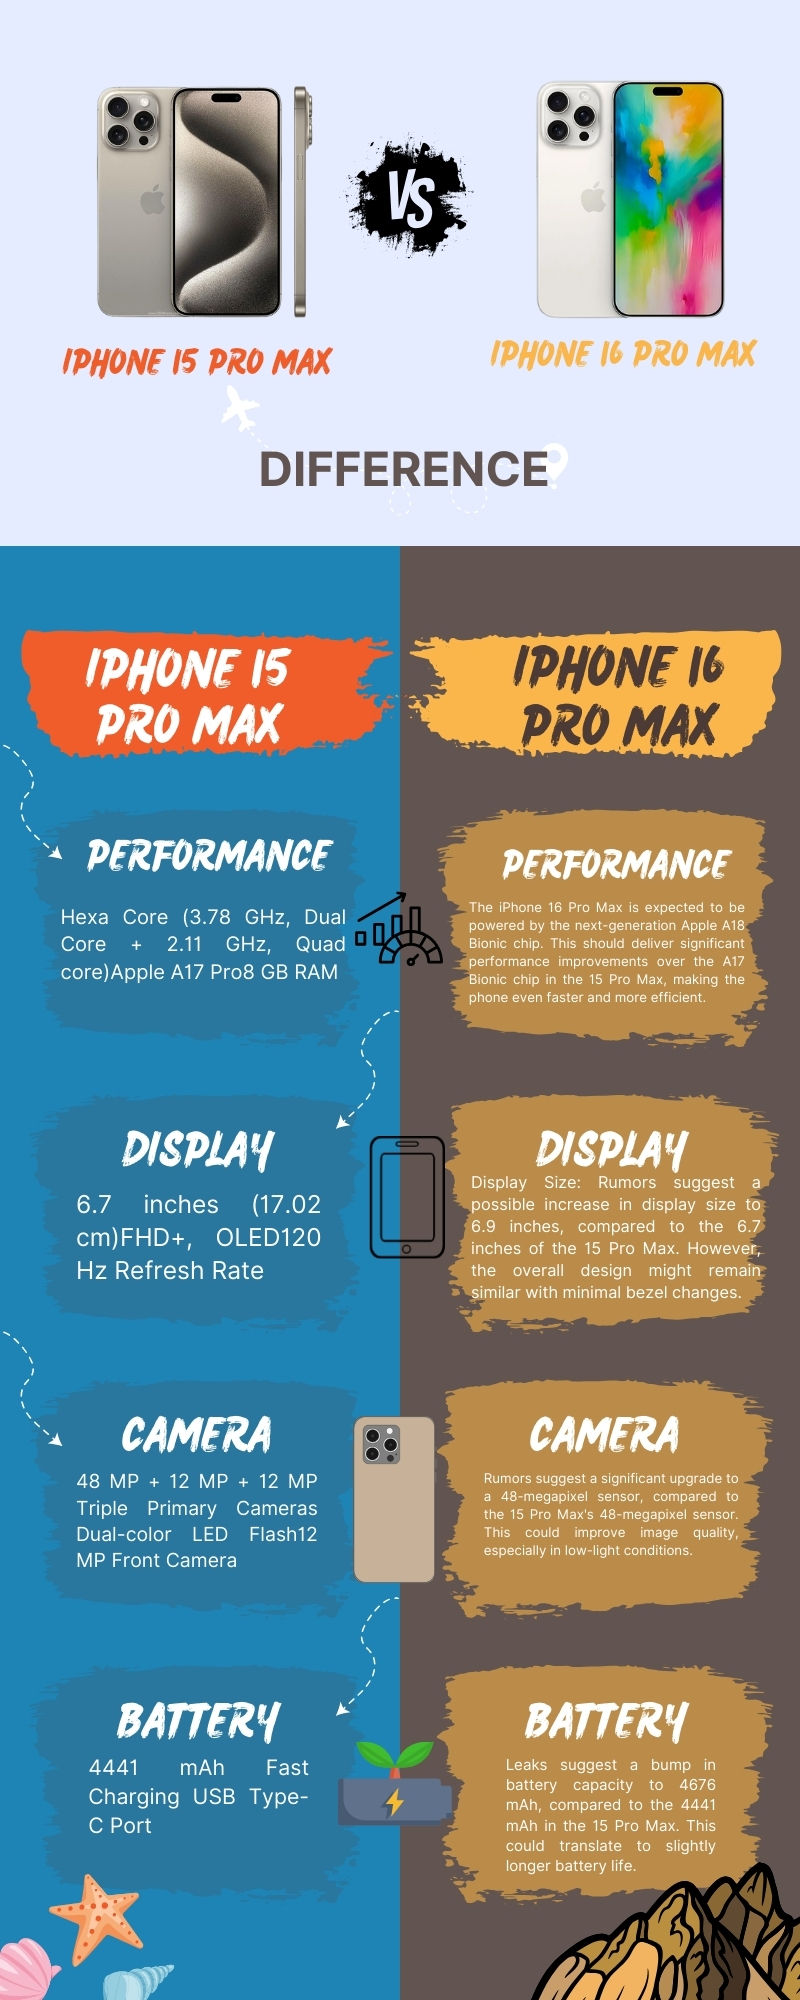 iPhone 15 Pro Max vs iPhone 16 Pro Max